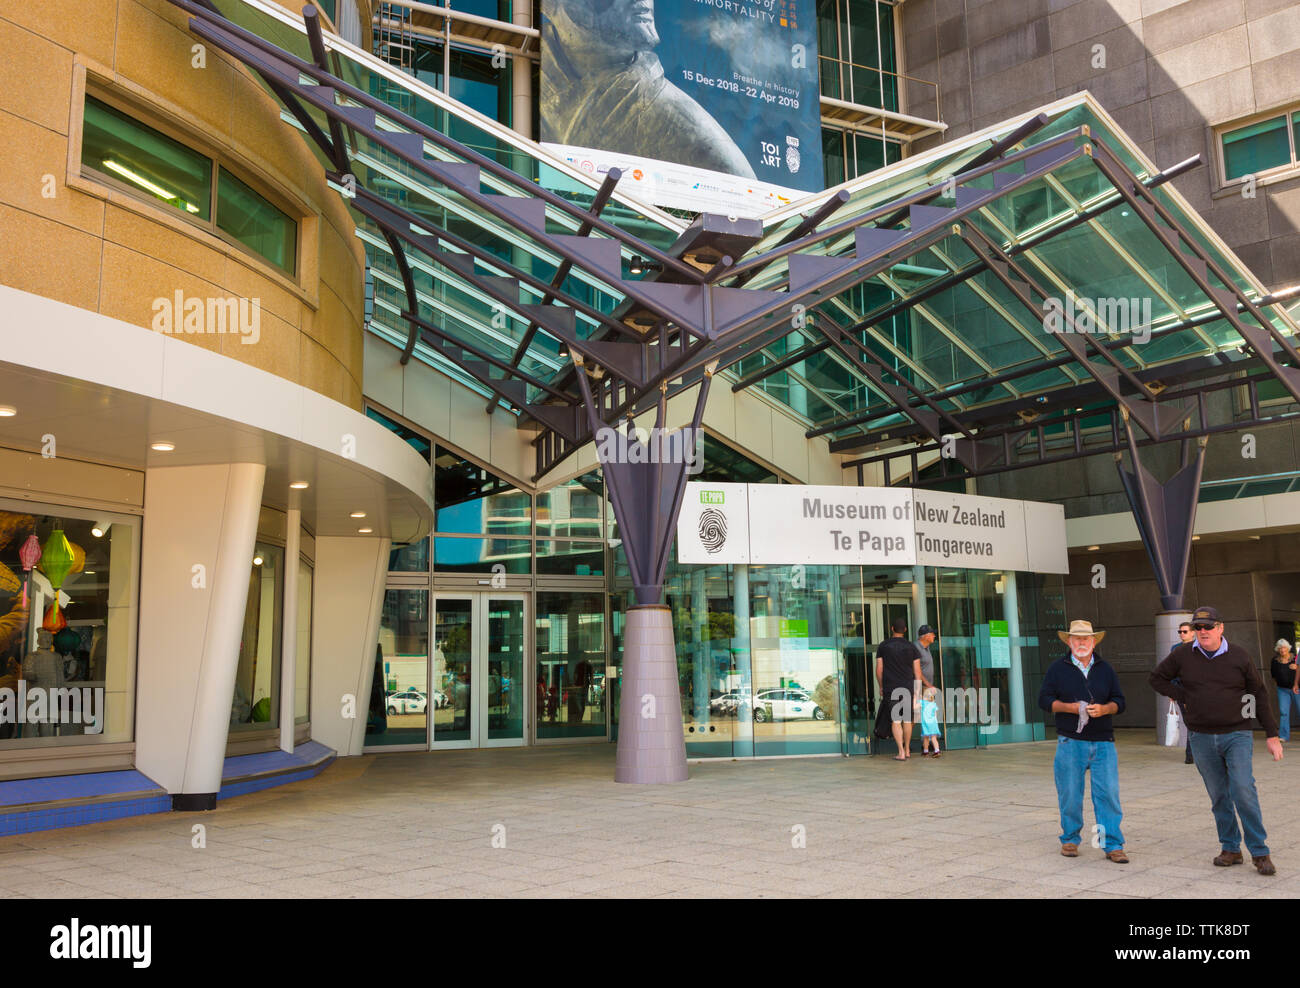 Entrance to The museum of new zealand, Wellington, New Zealand Stock Photo